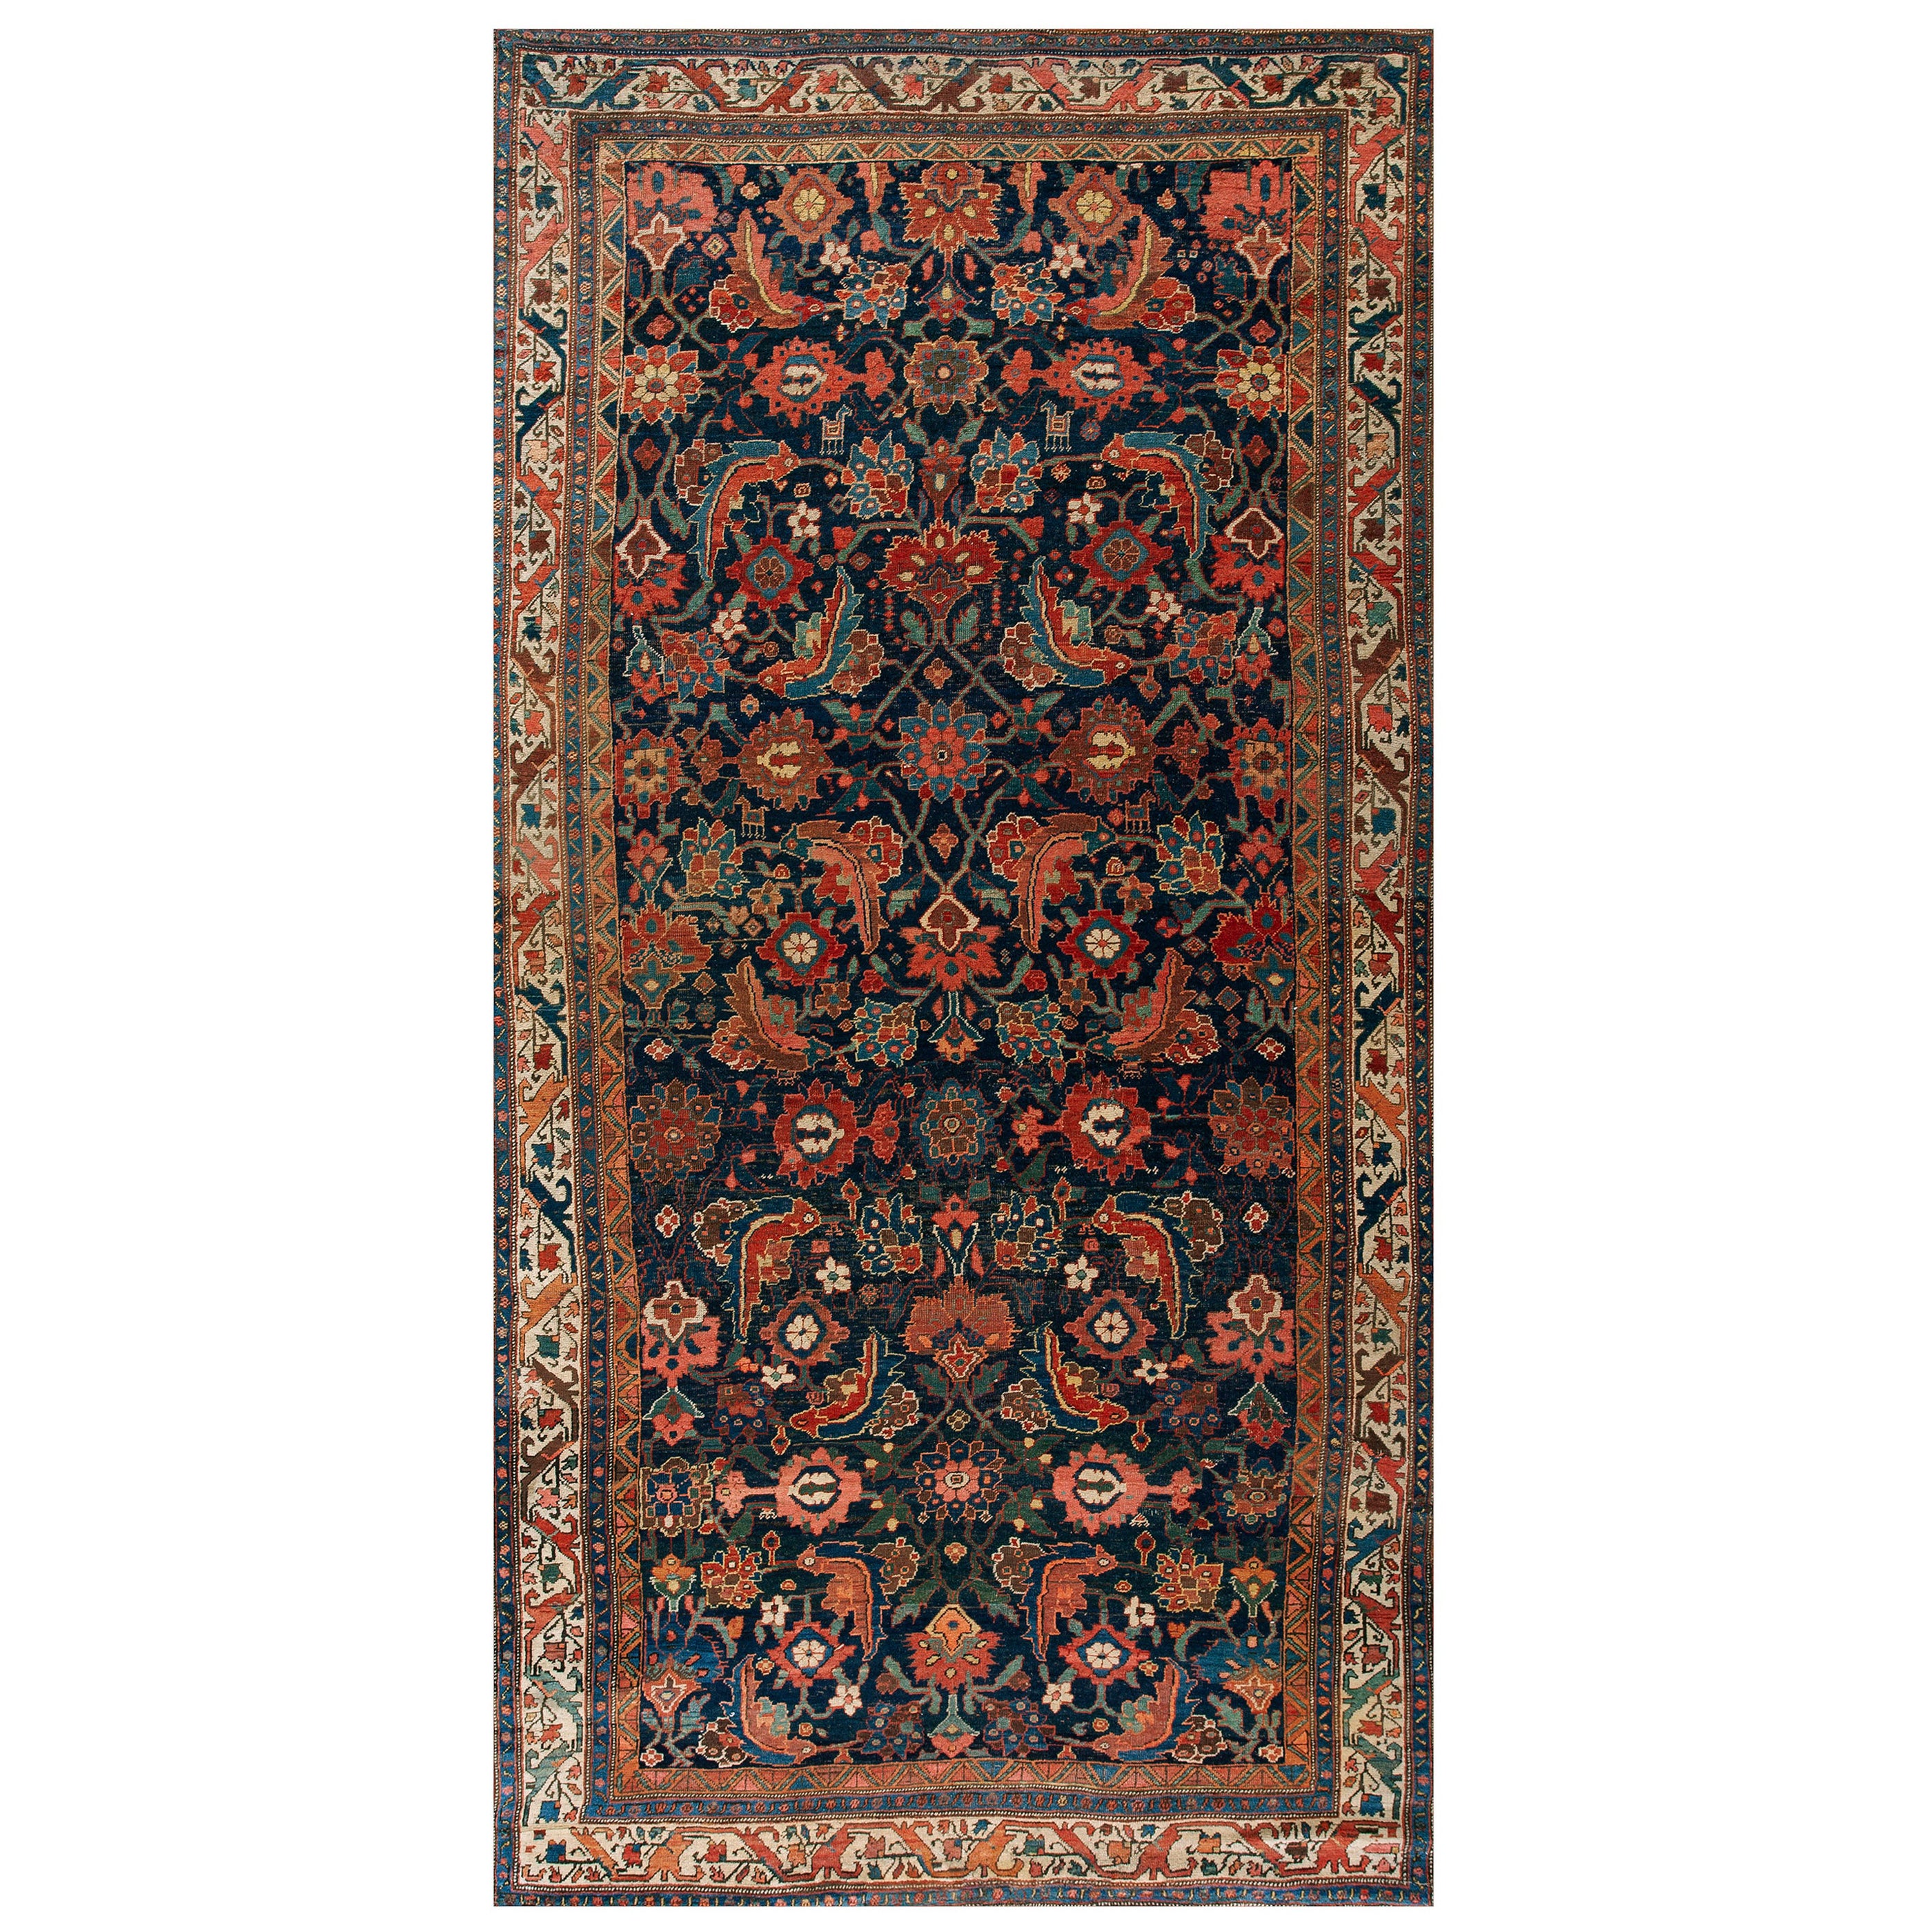 19th Century Persian Bijar Carpet ( 6'9" x 13'6" - 206 x 412 ) For Sale